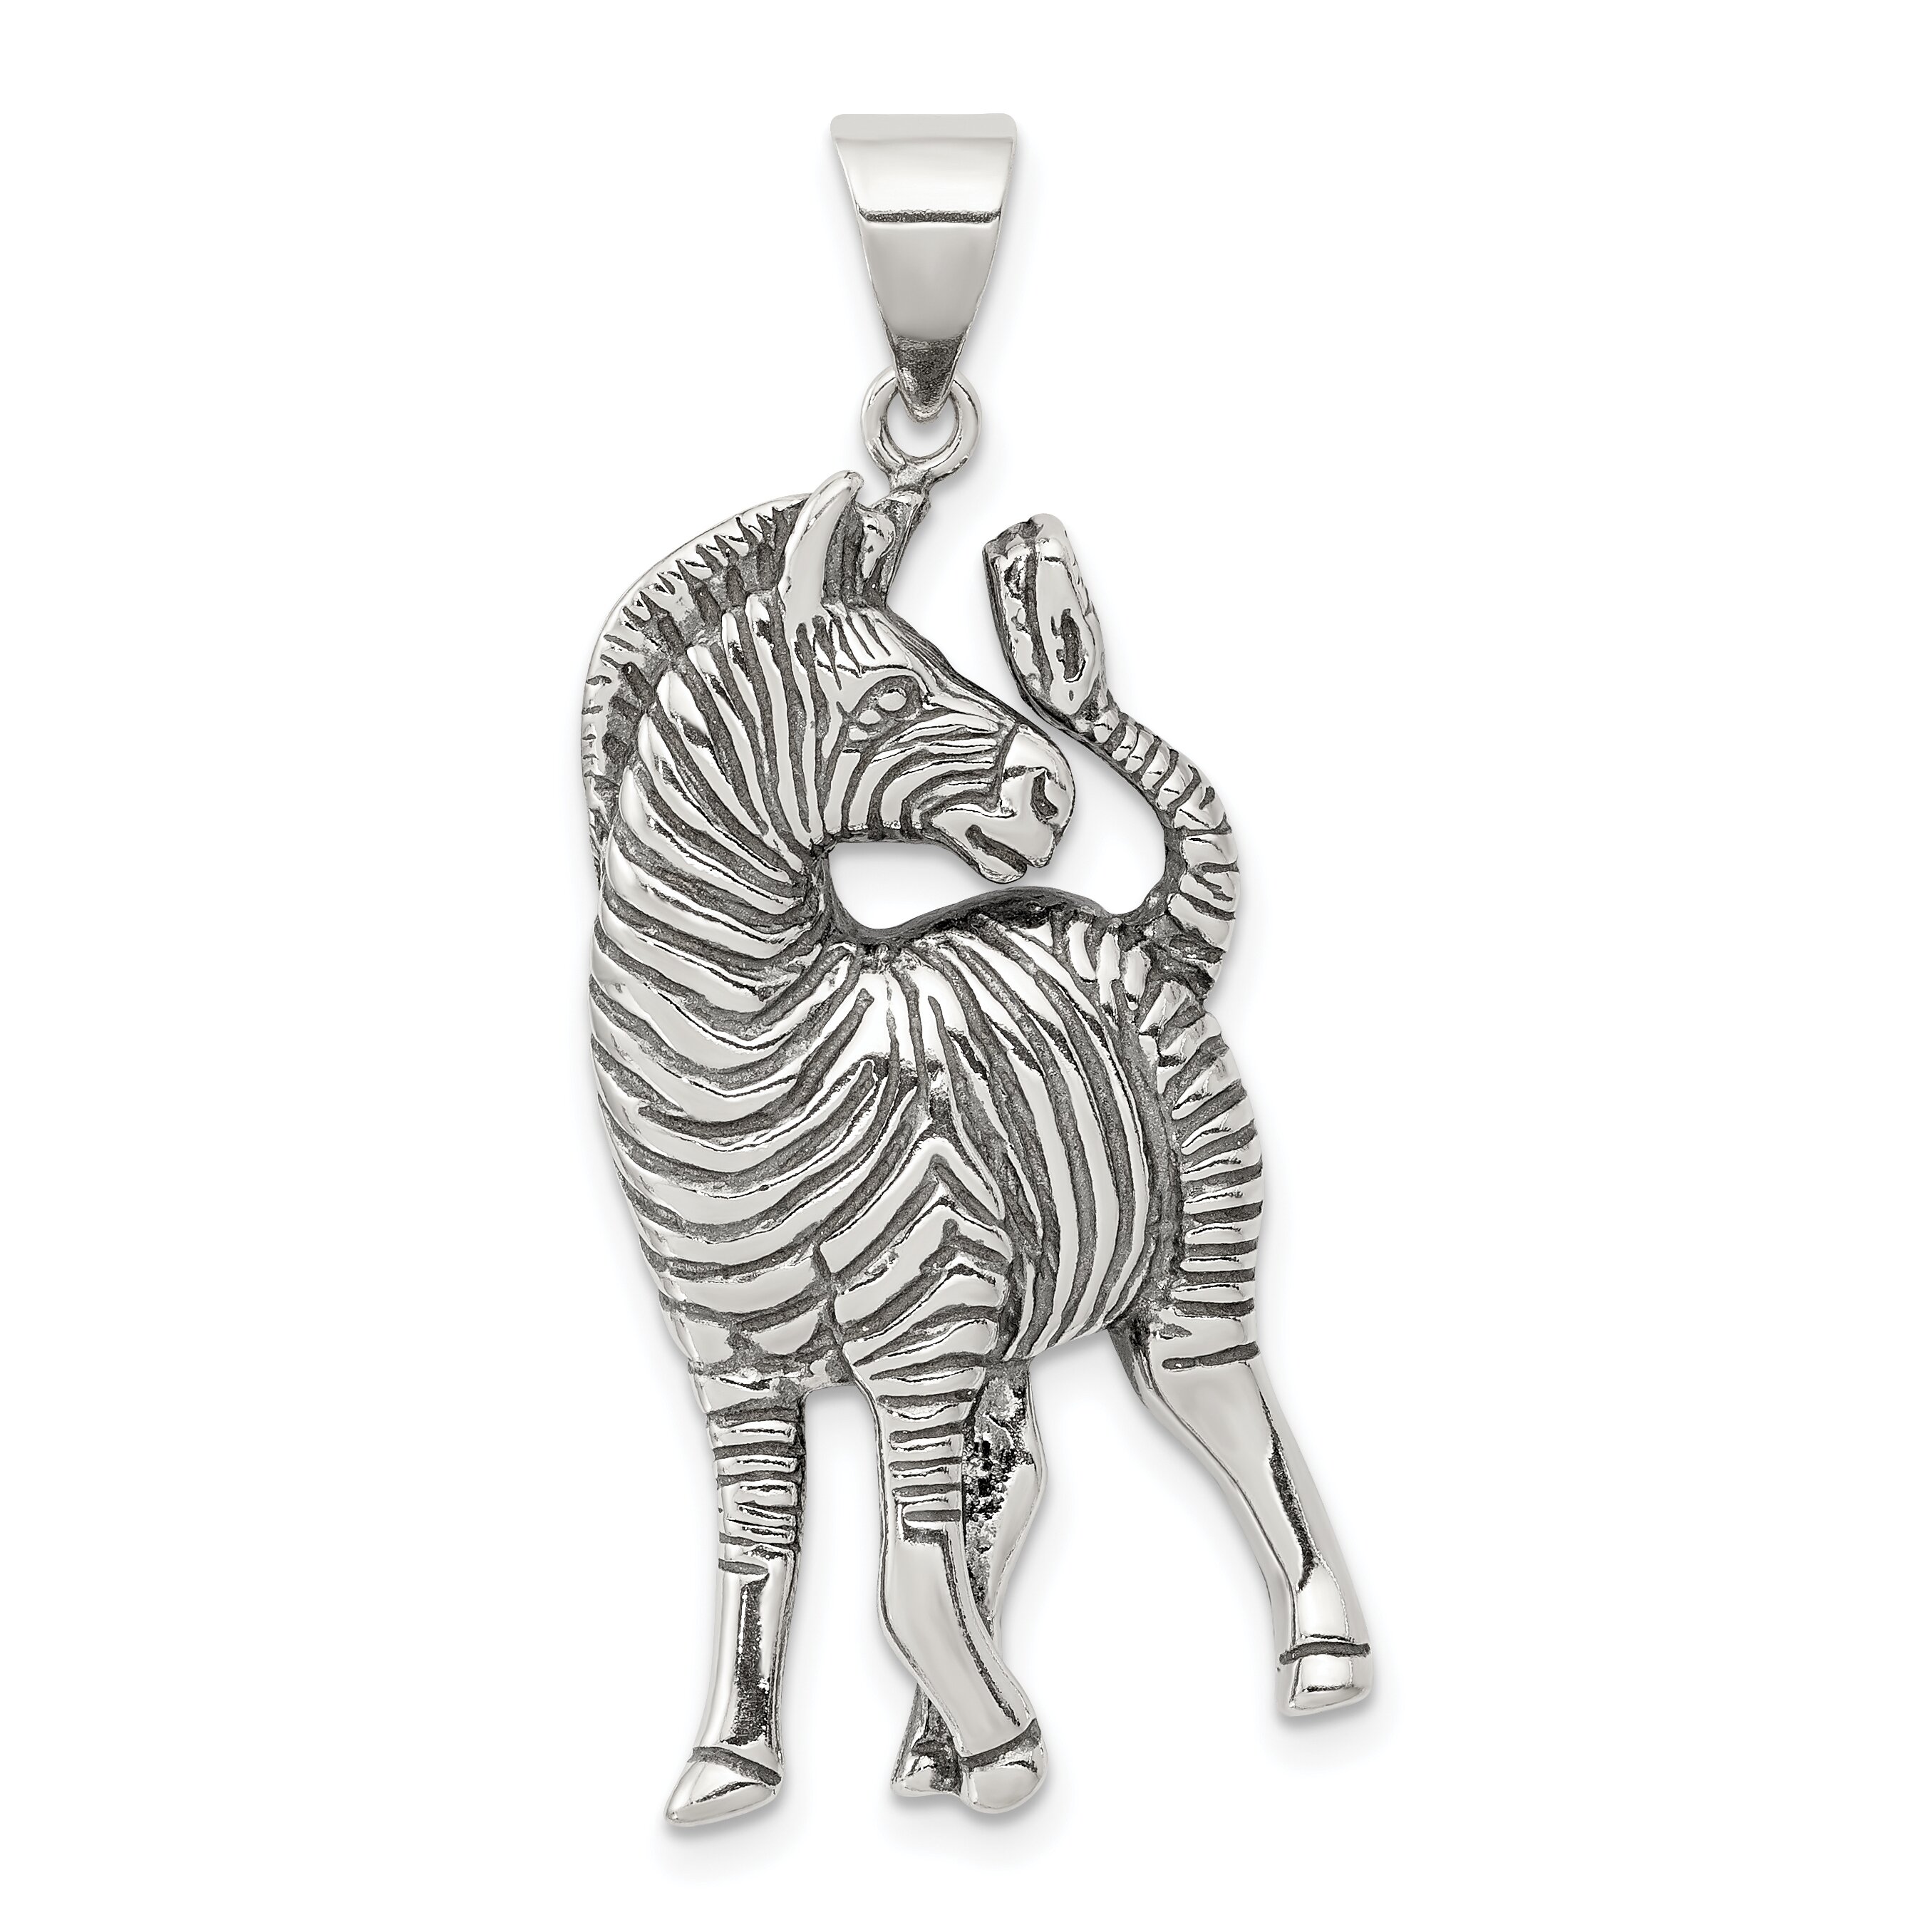 Findingking Sterling Silver Antiqued Zebra Pendant